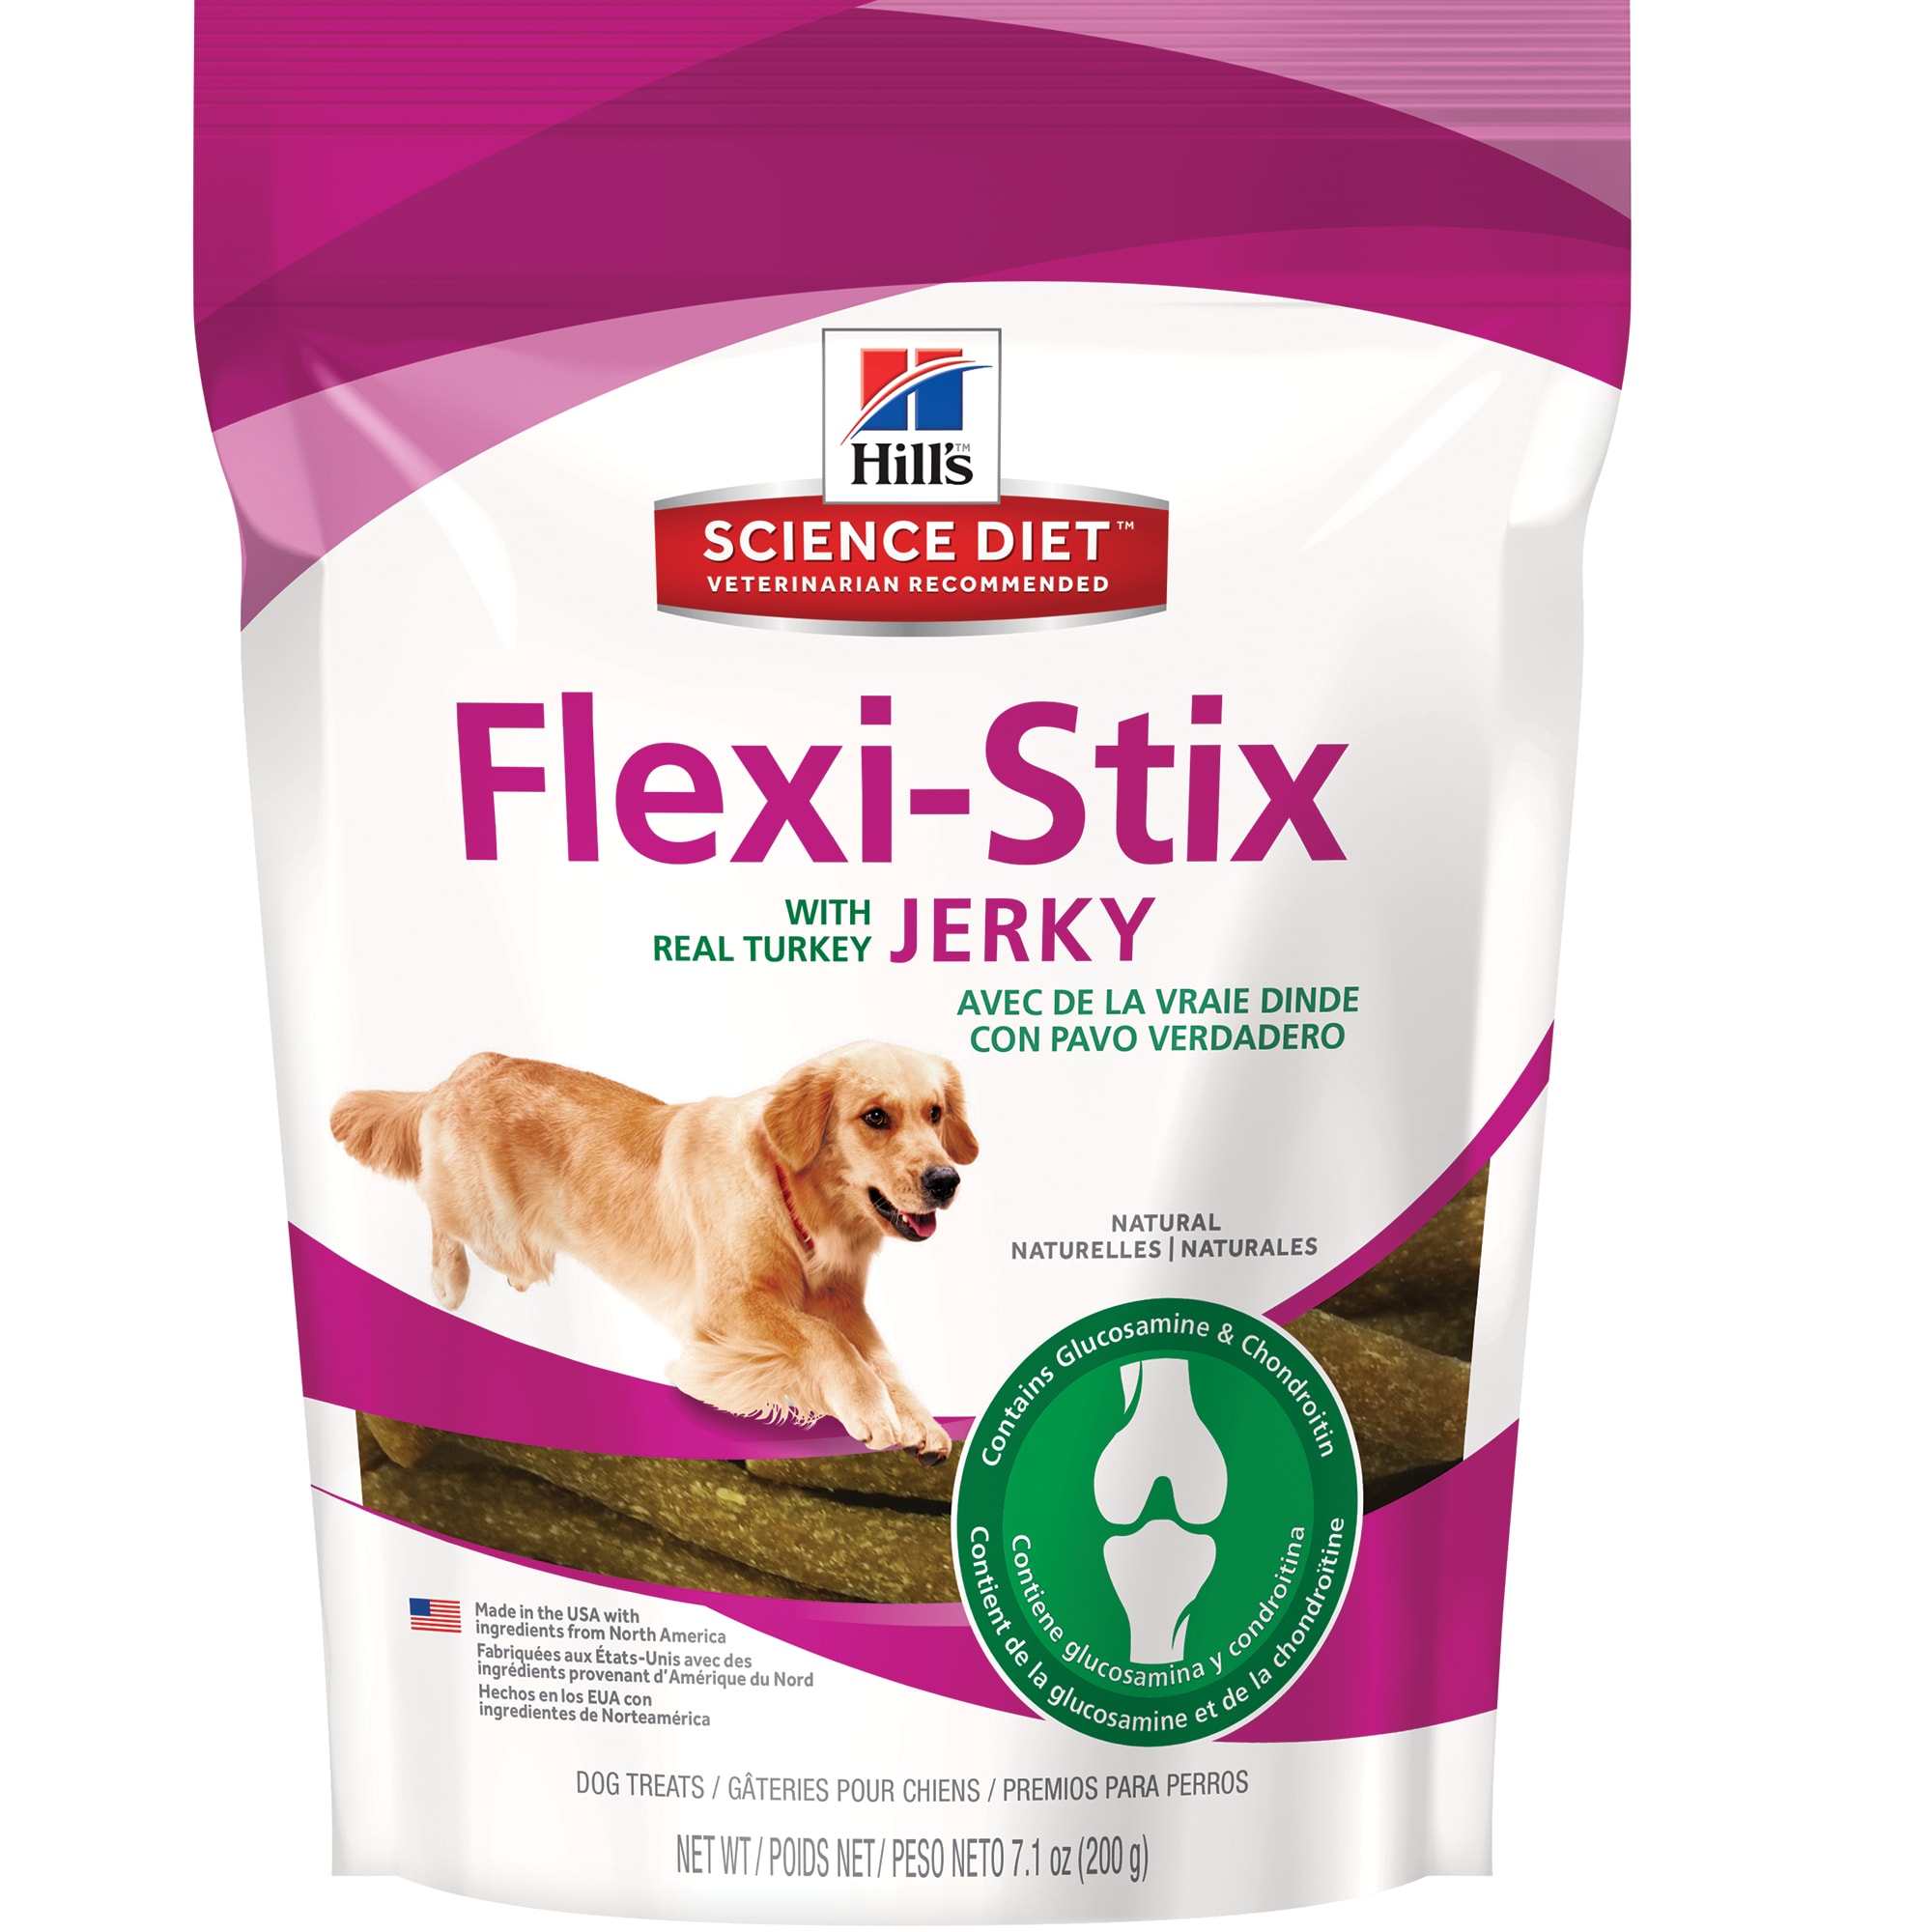 Photos - Dog Food Hills Hill's Hill's Natural Flexi-Stix Turkey Jerky Dog Treat, 7.1 oz., Bag 3680 